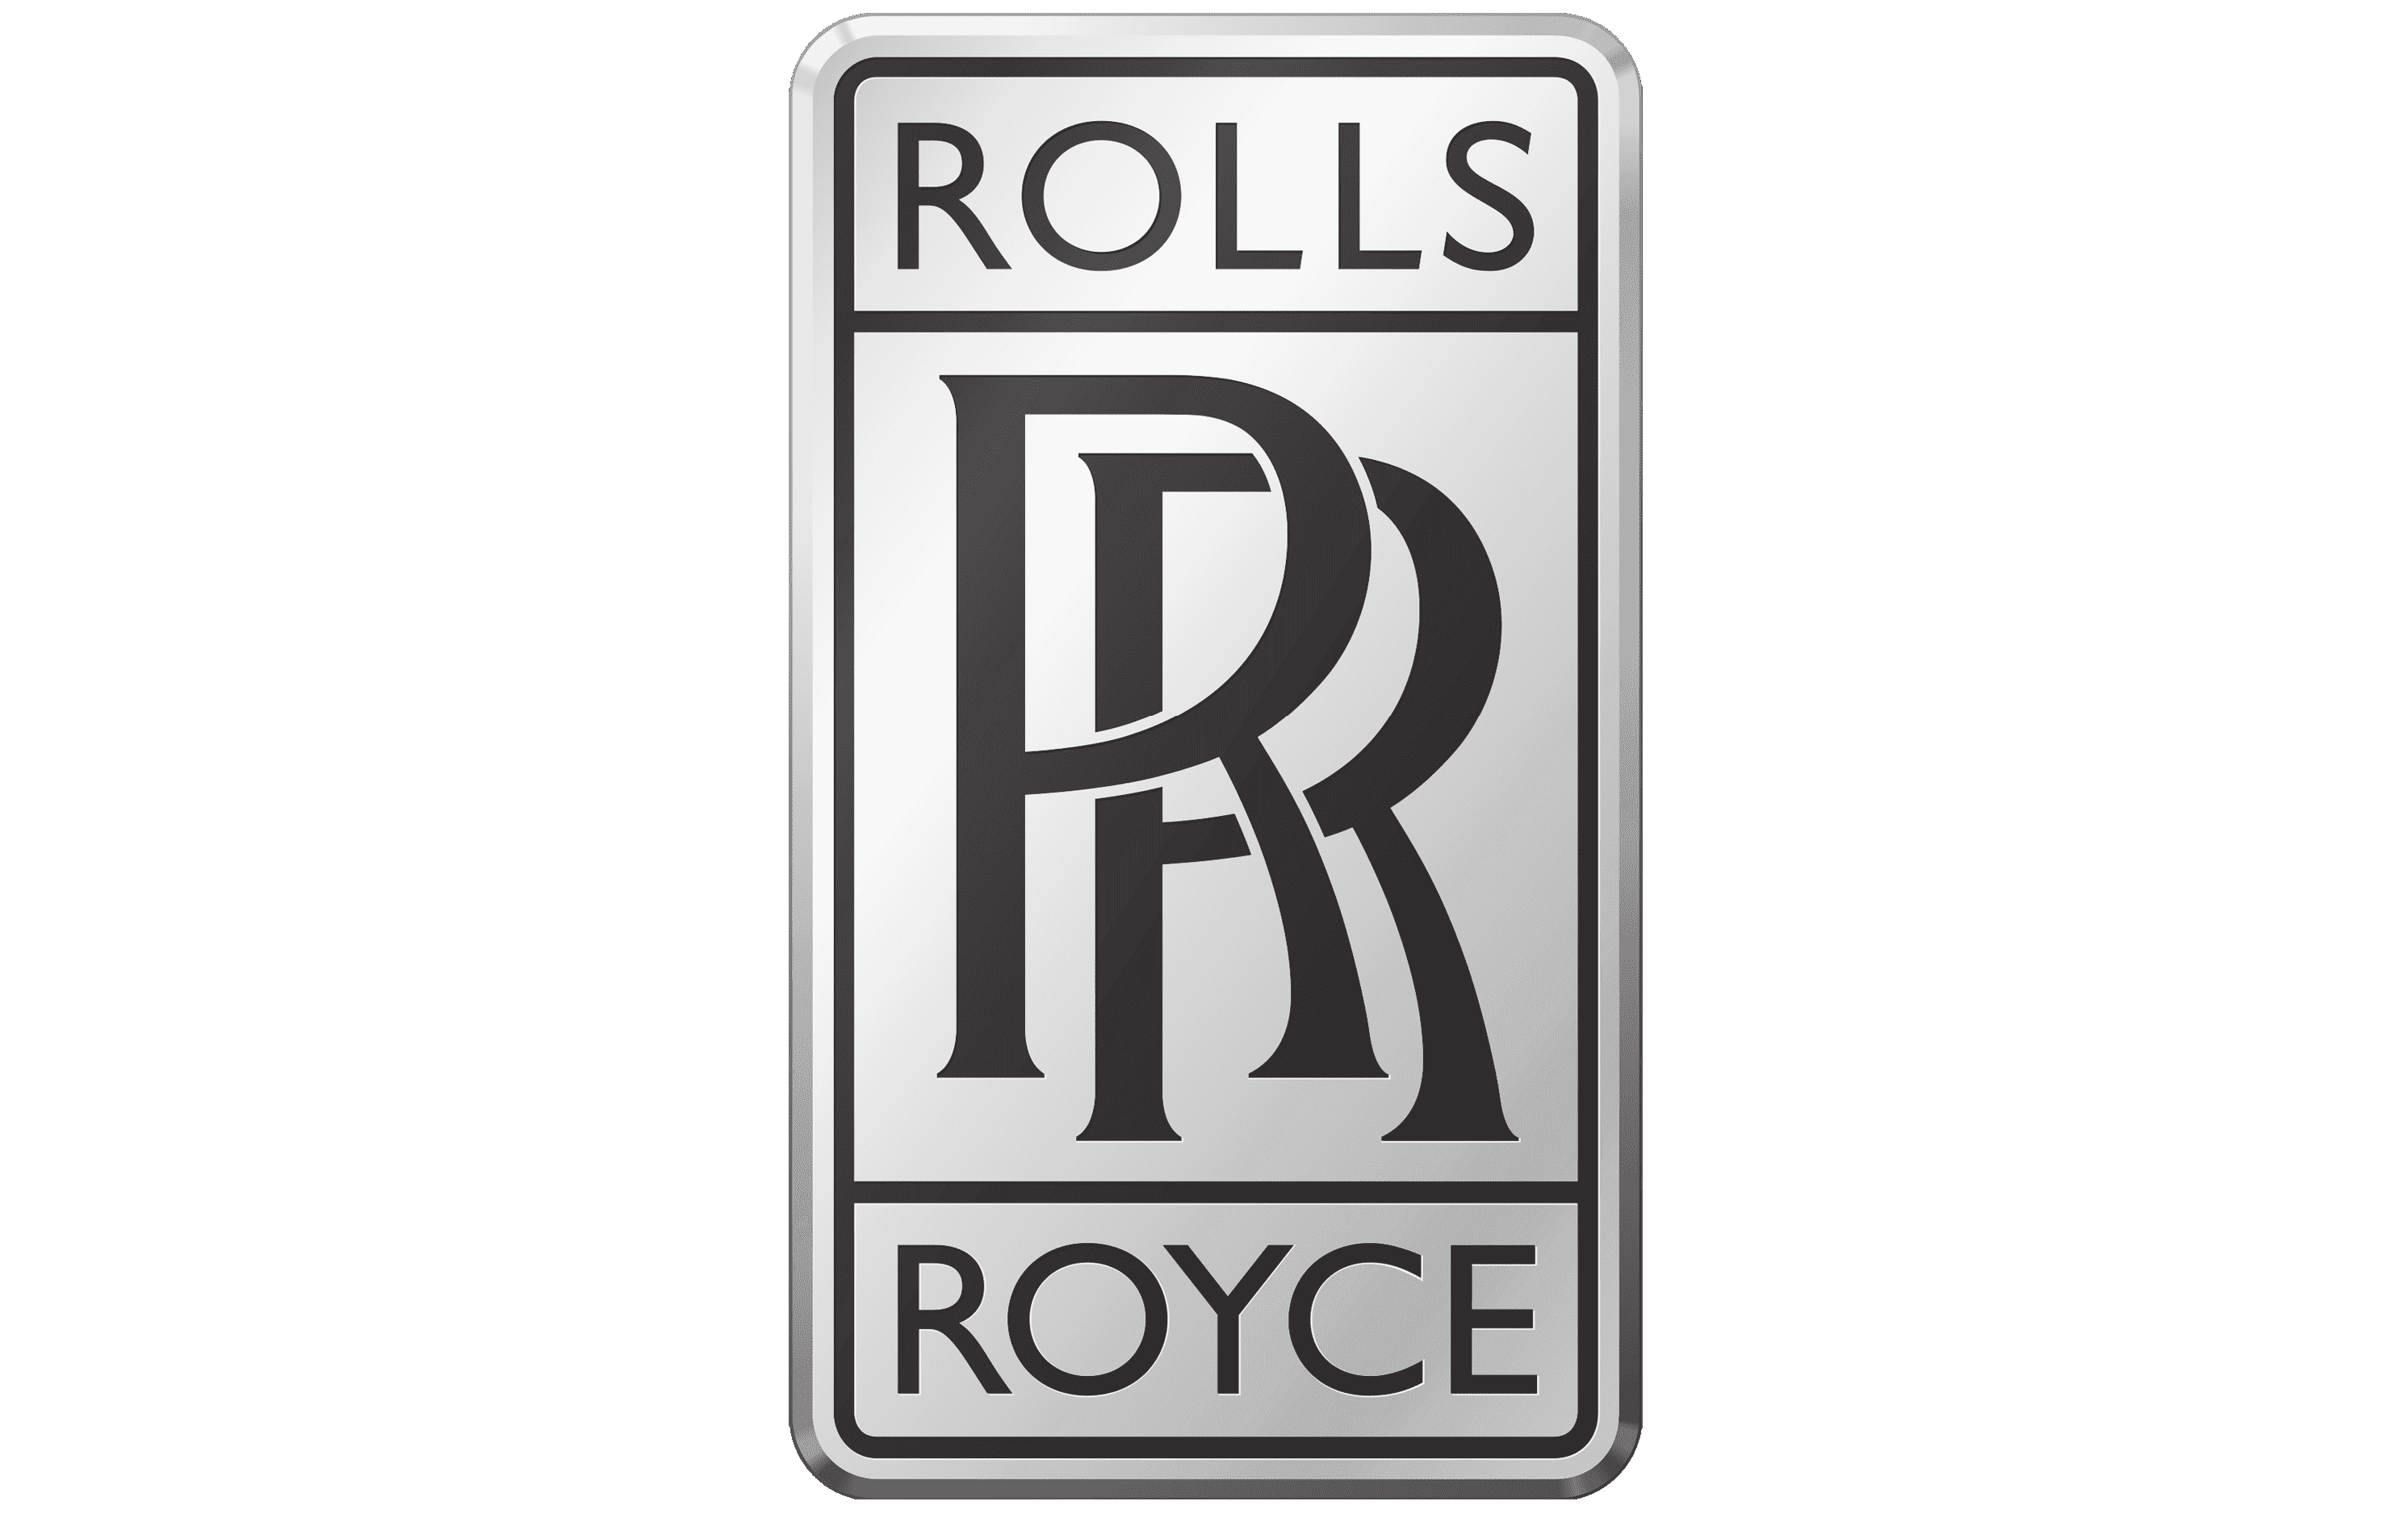 Rolls Royce redesign logo RR LOGO by Biswajit Design on Dribbble